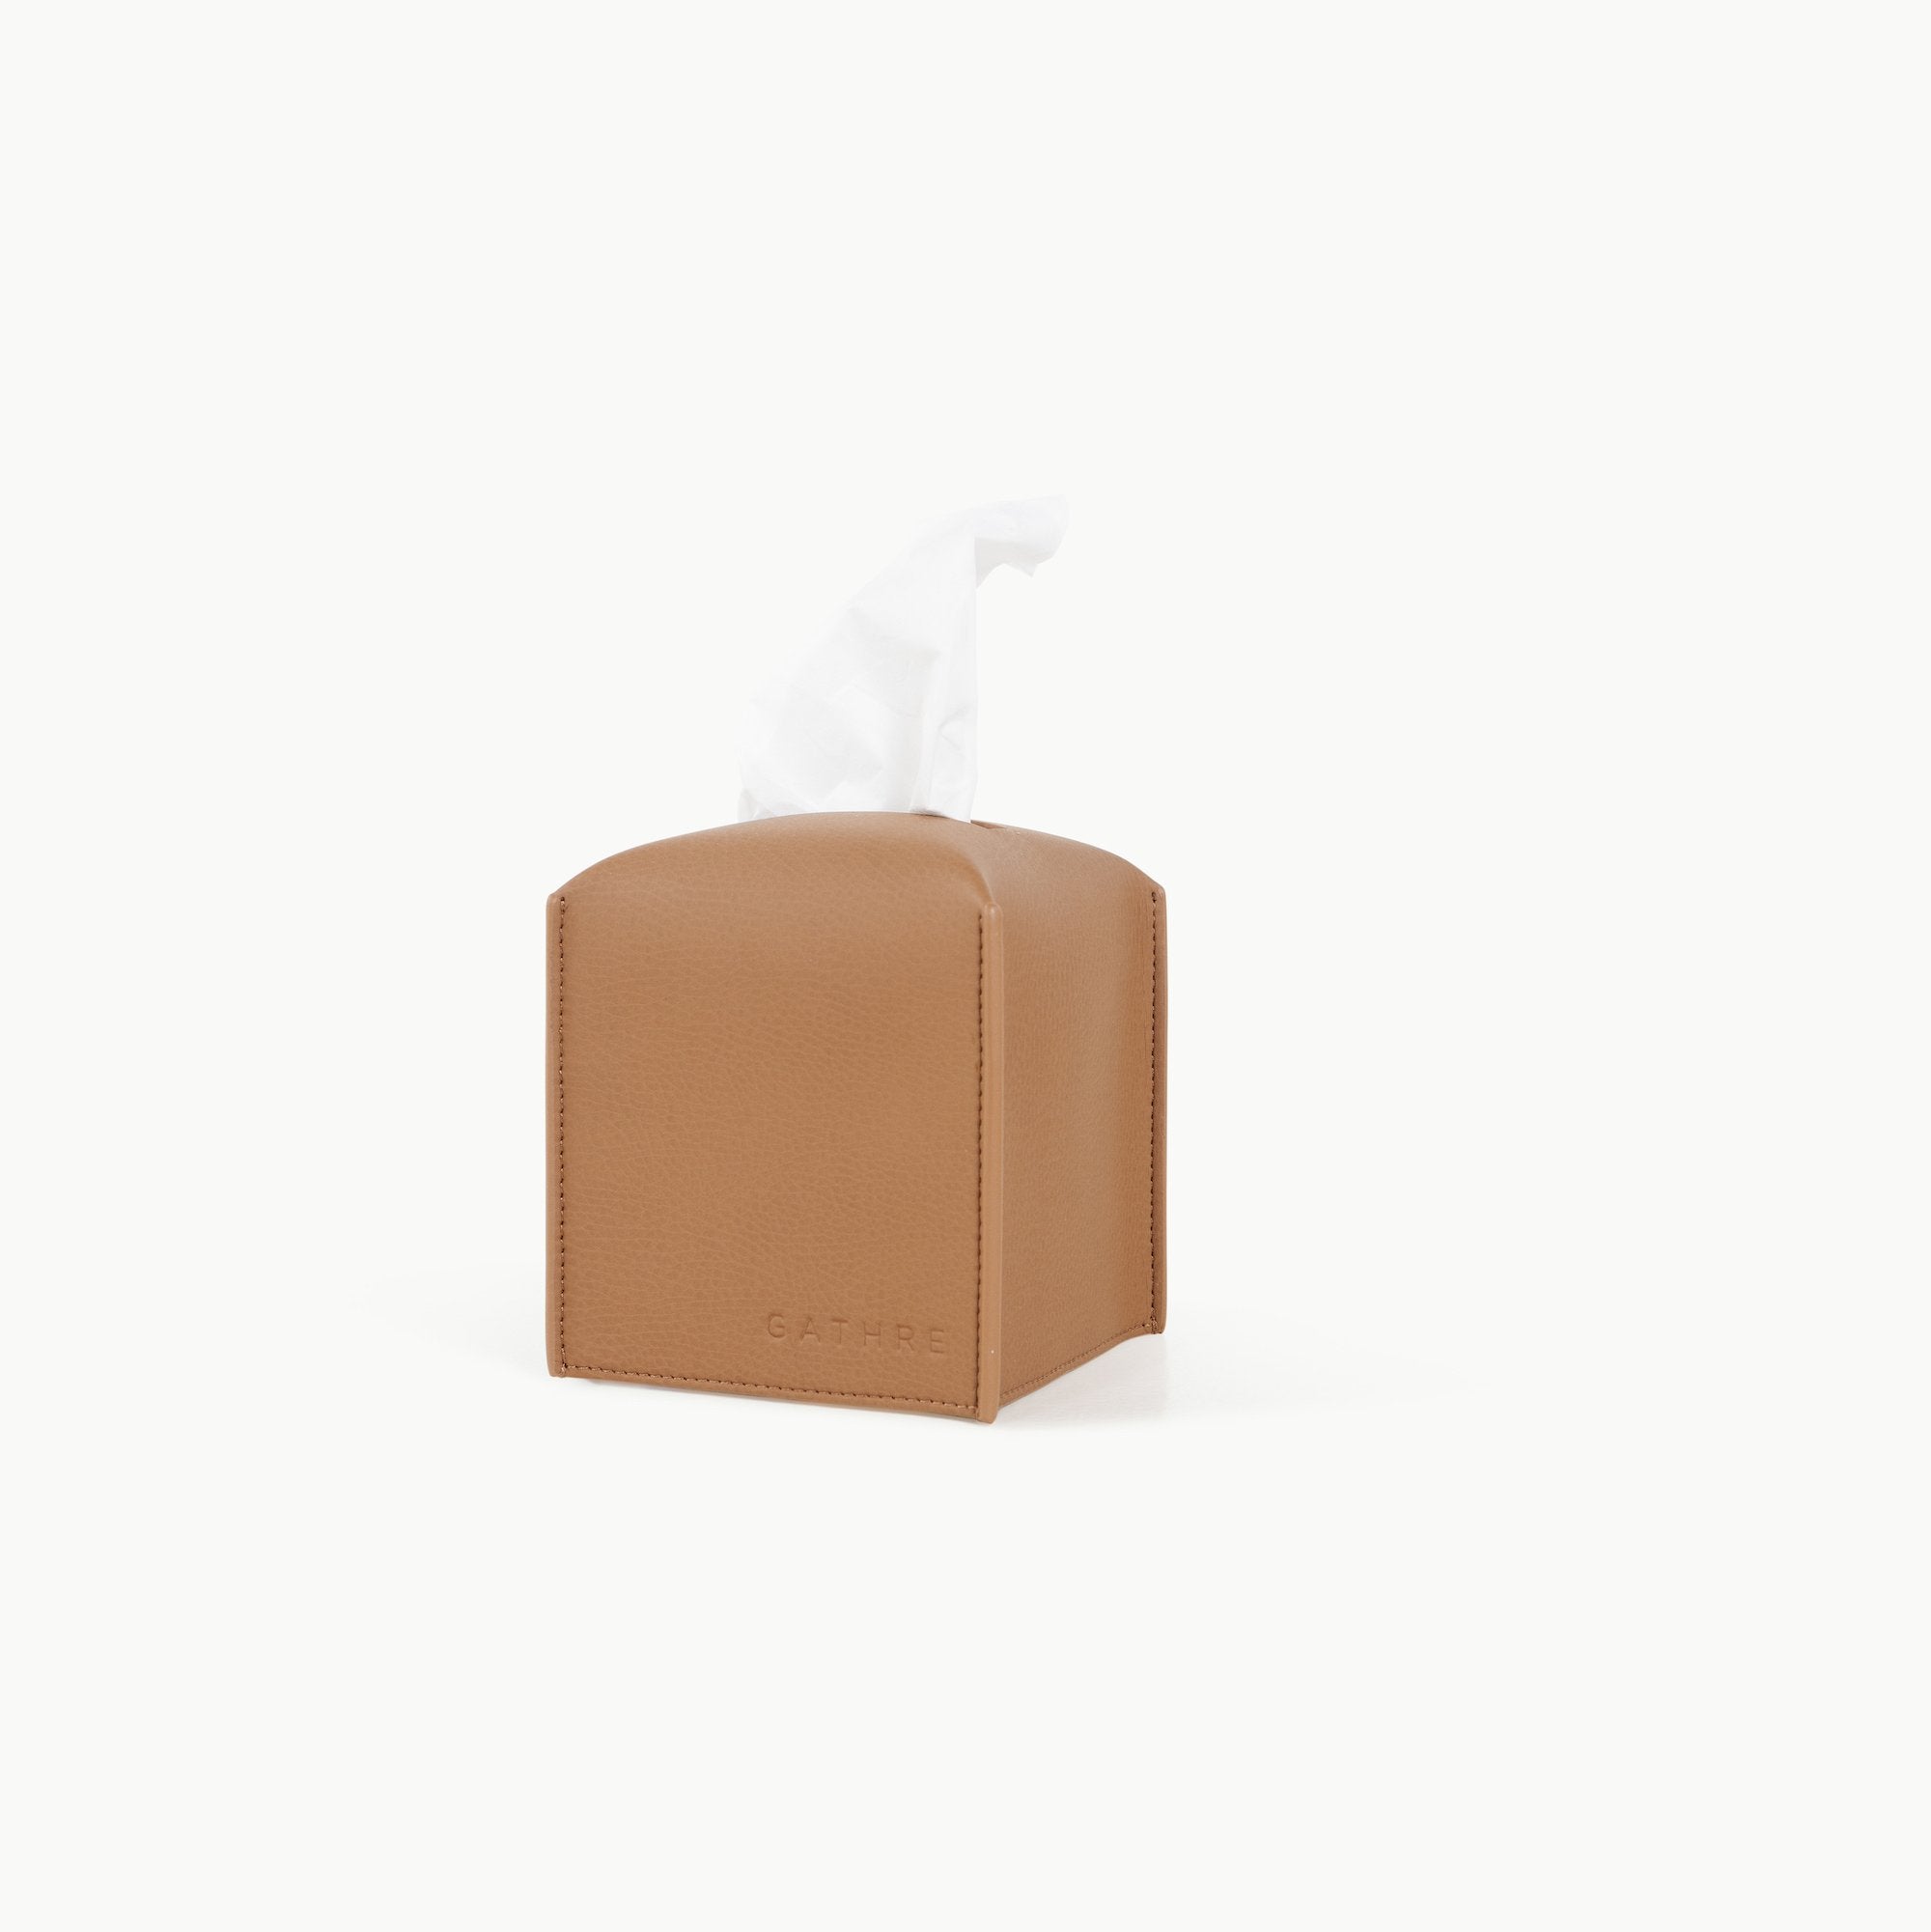 Cedar (on sale)@Cedar Tissue Box Cover